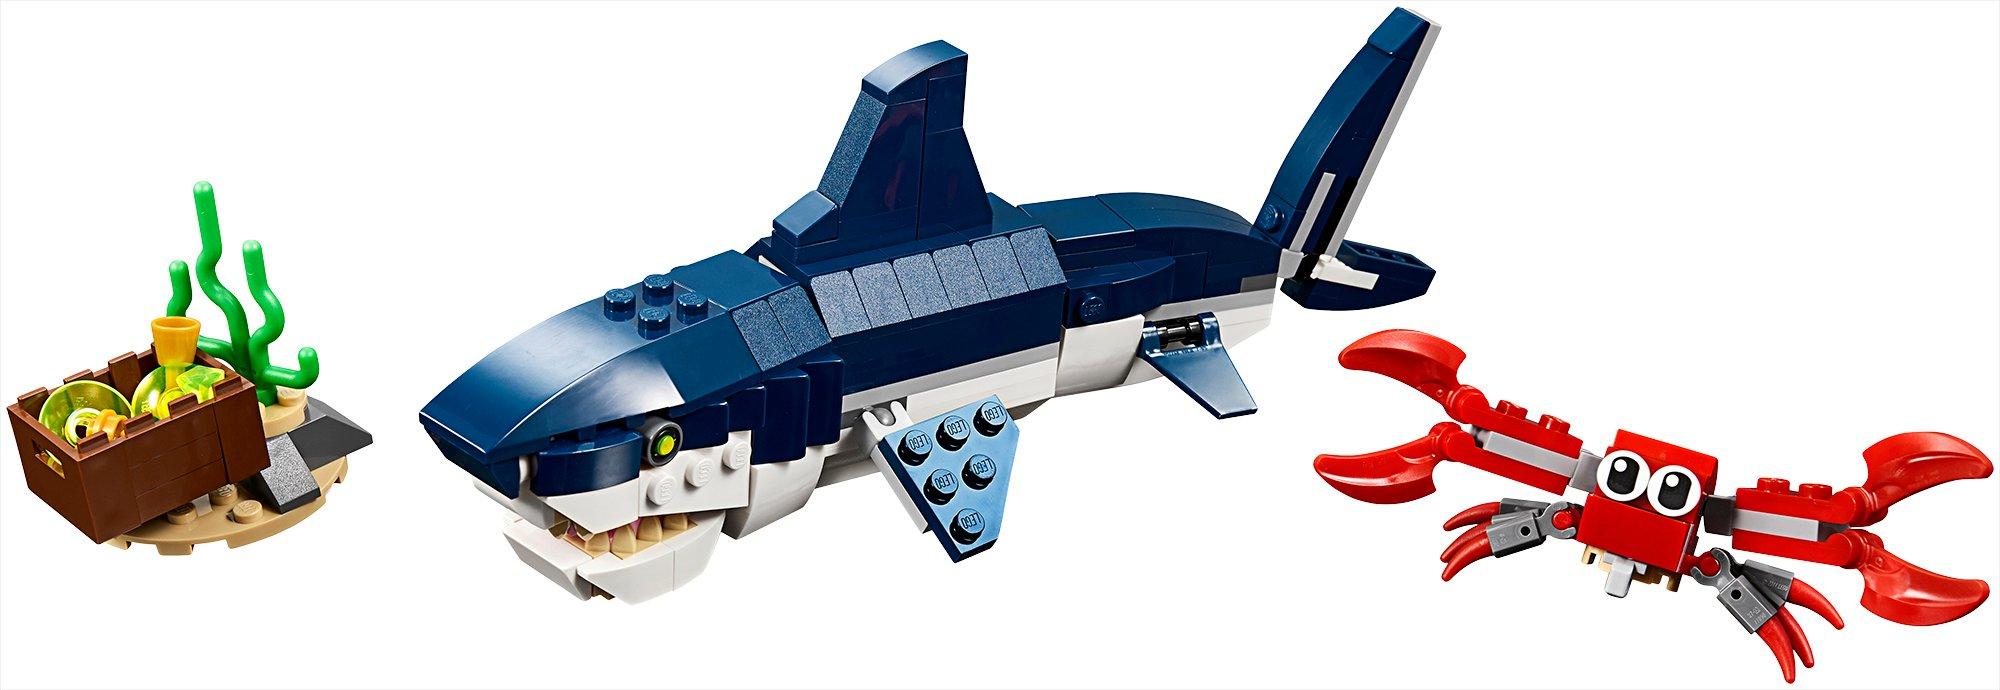 Lego Deep Sea Creatures Toy Set